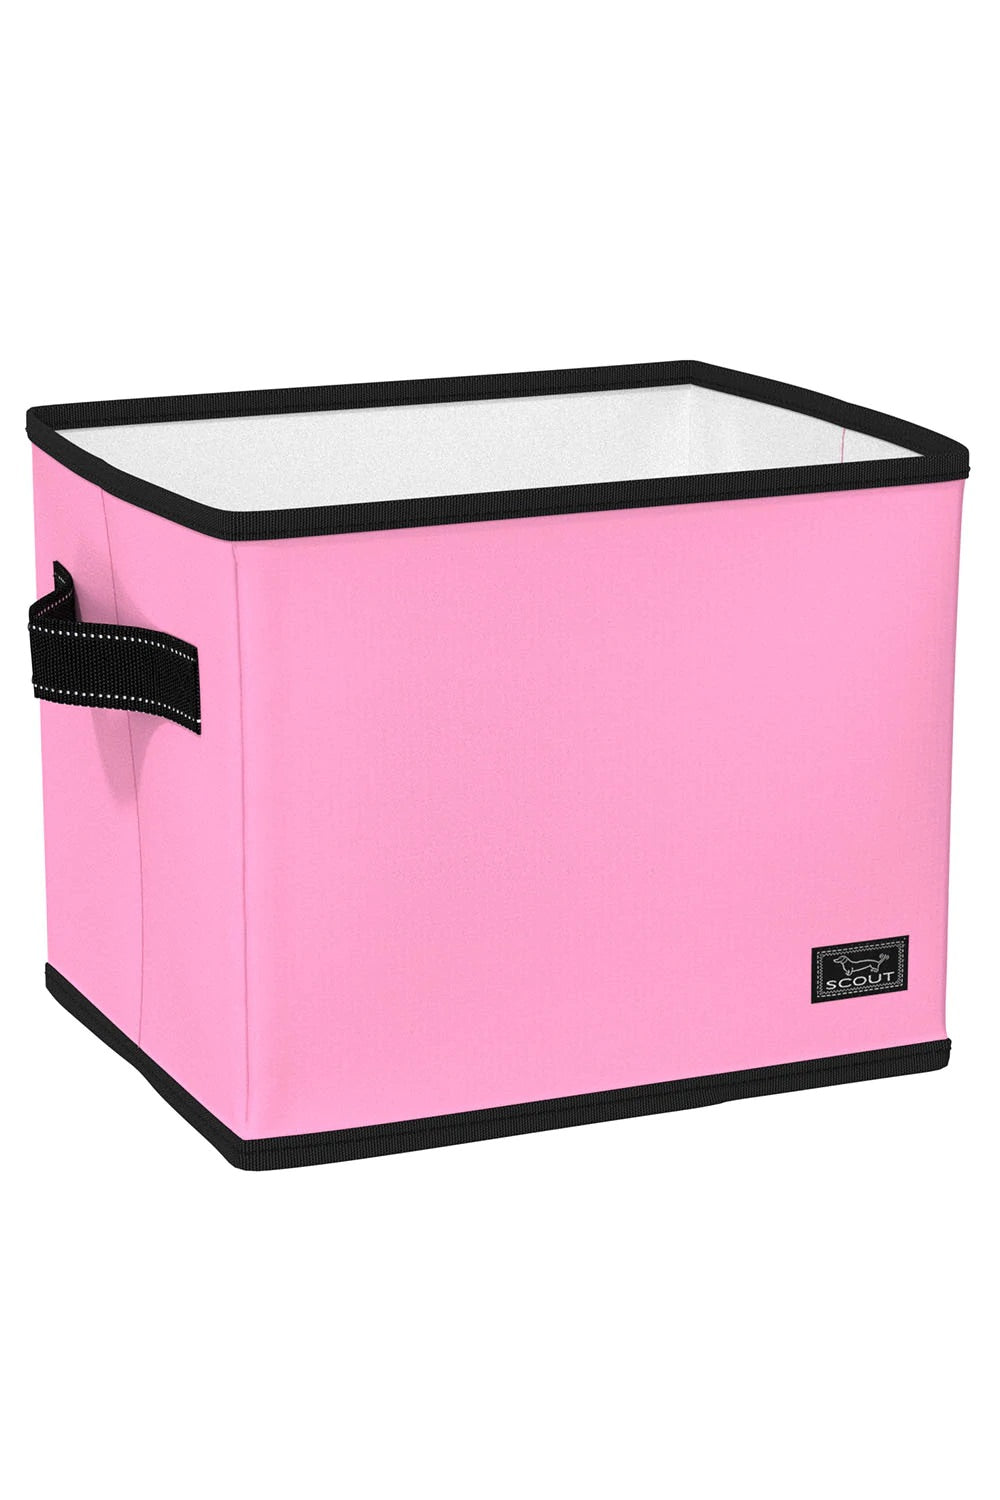 Hang 10 Small Storage Bin | Pink Lemonade